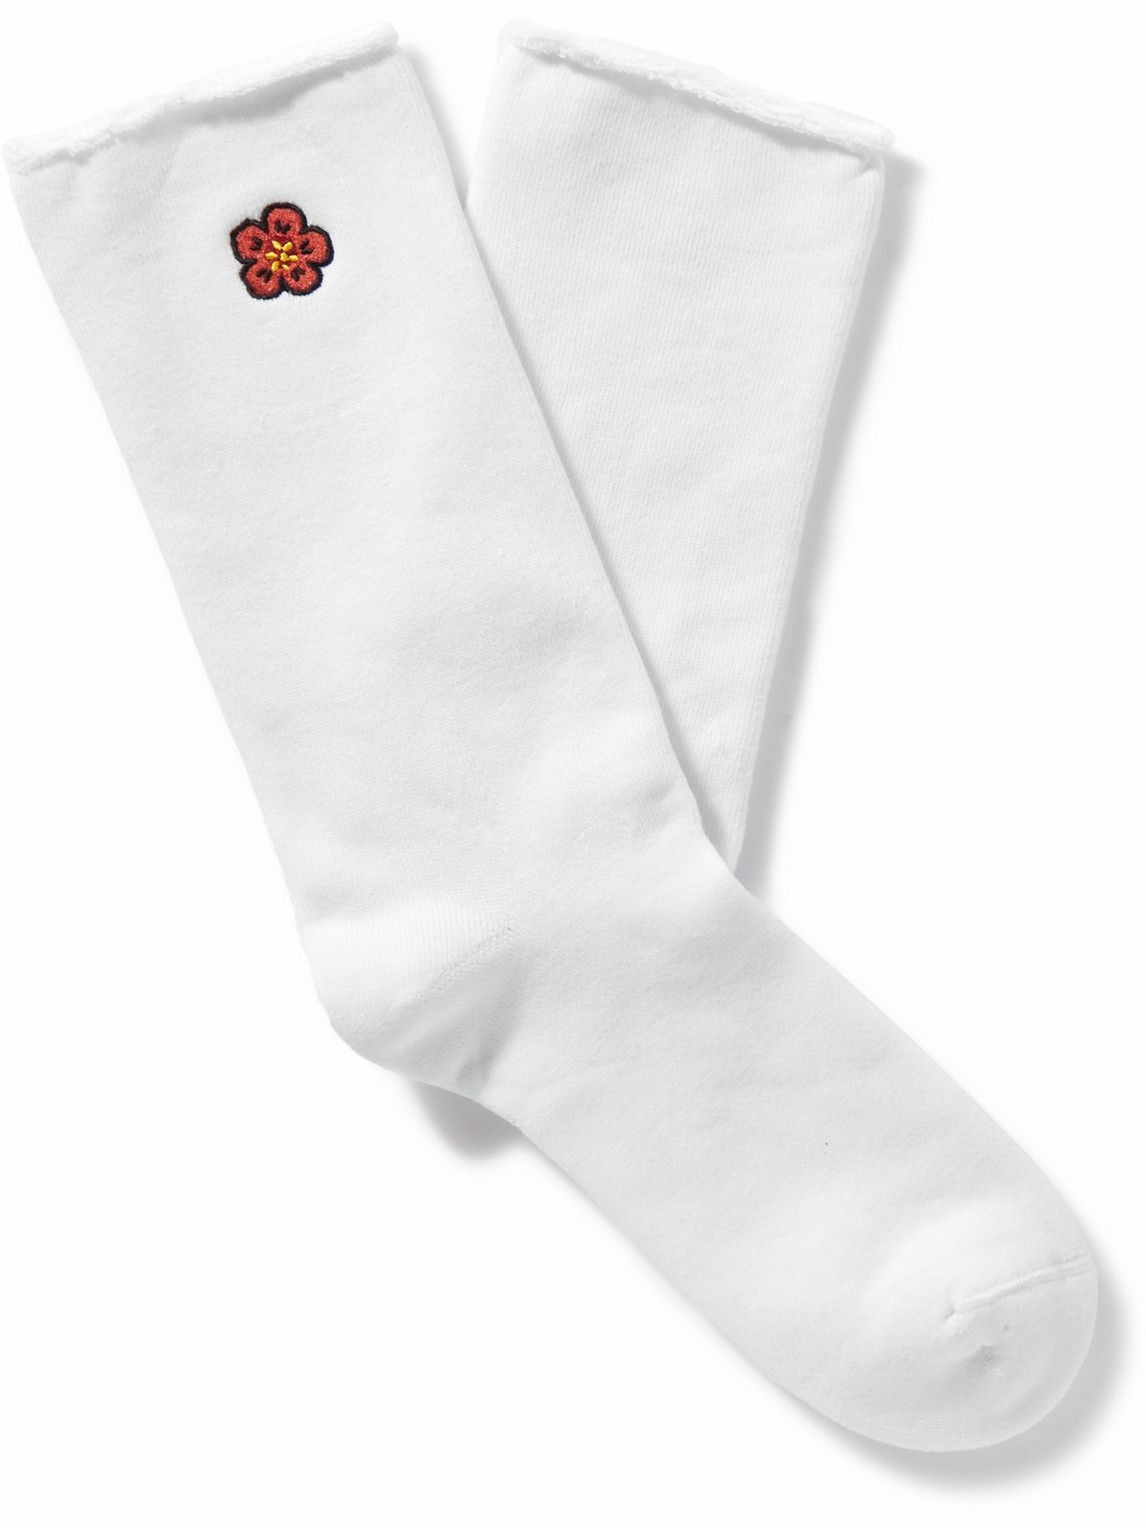 KENZO - Embroidered Cotton-Blend Socks - White Kenzo